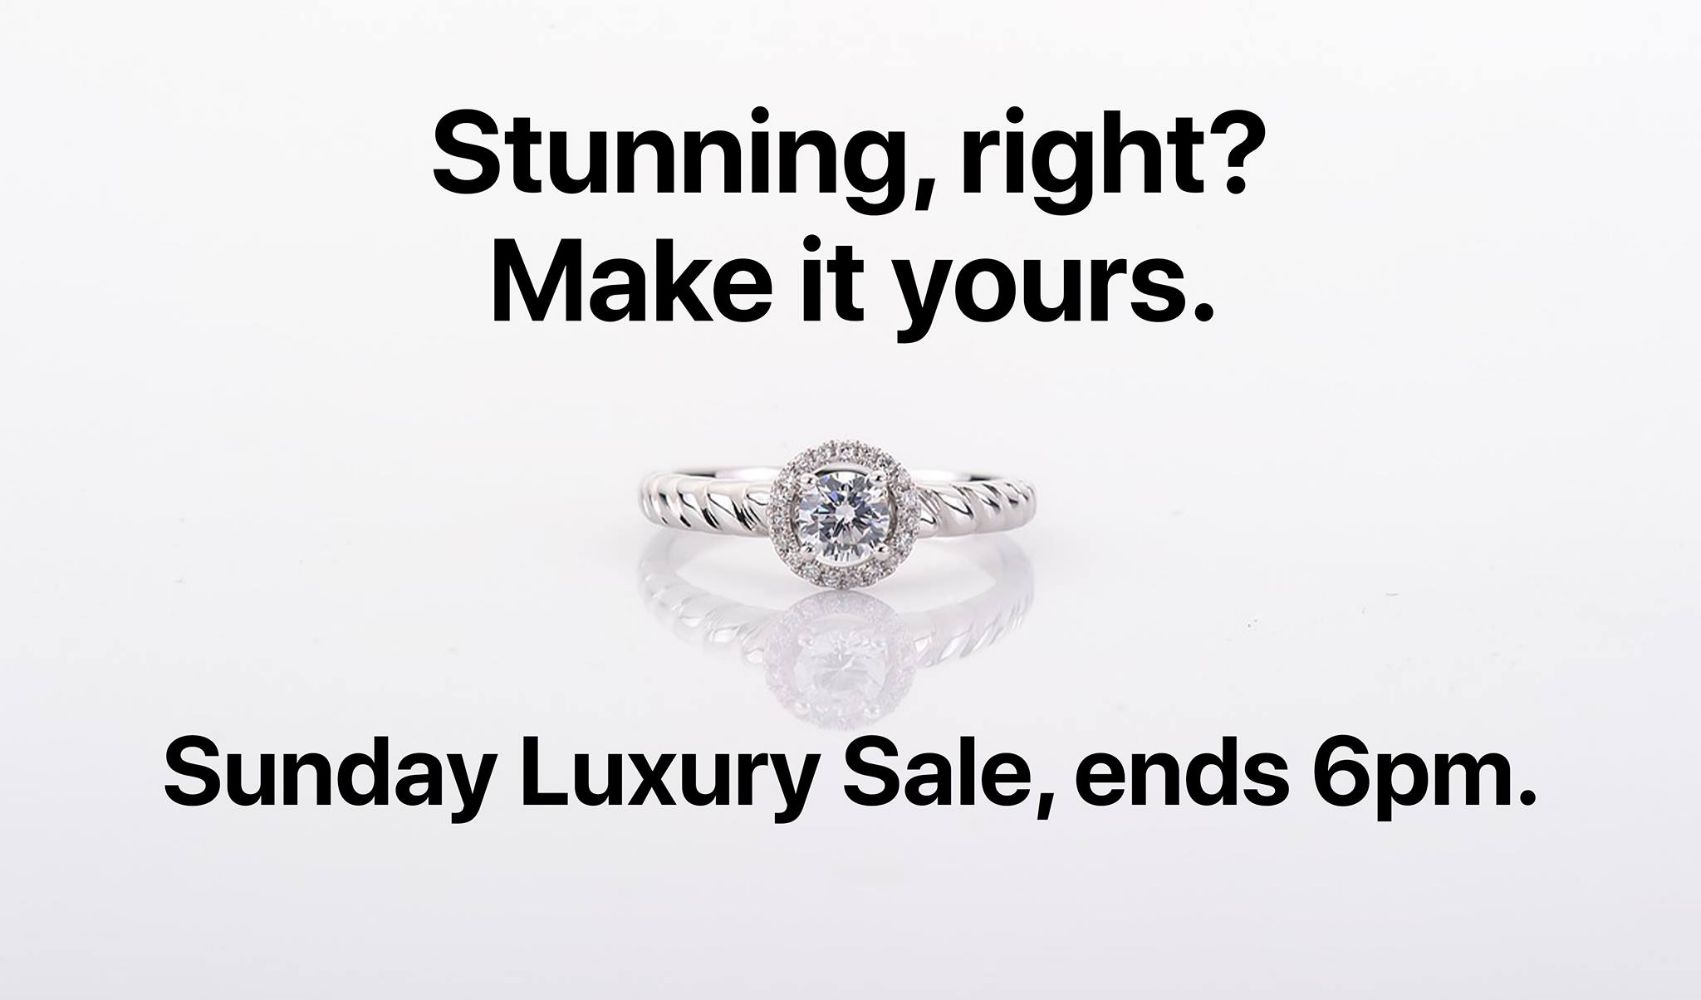 Sunday Luxury Jewellery Sale!